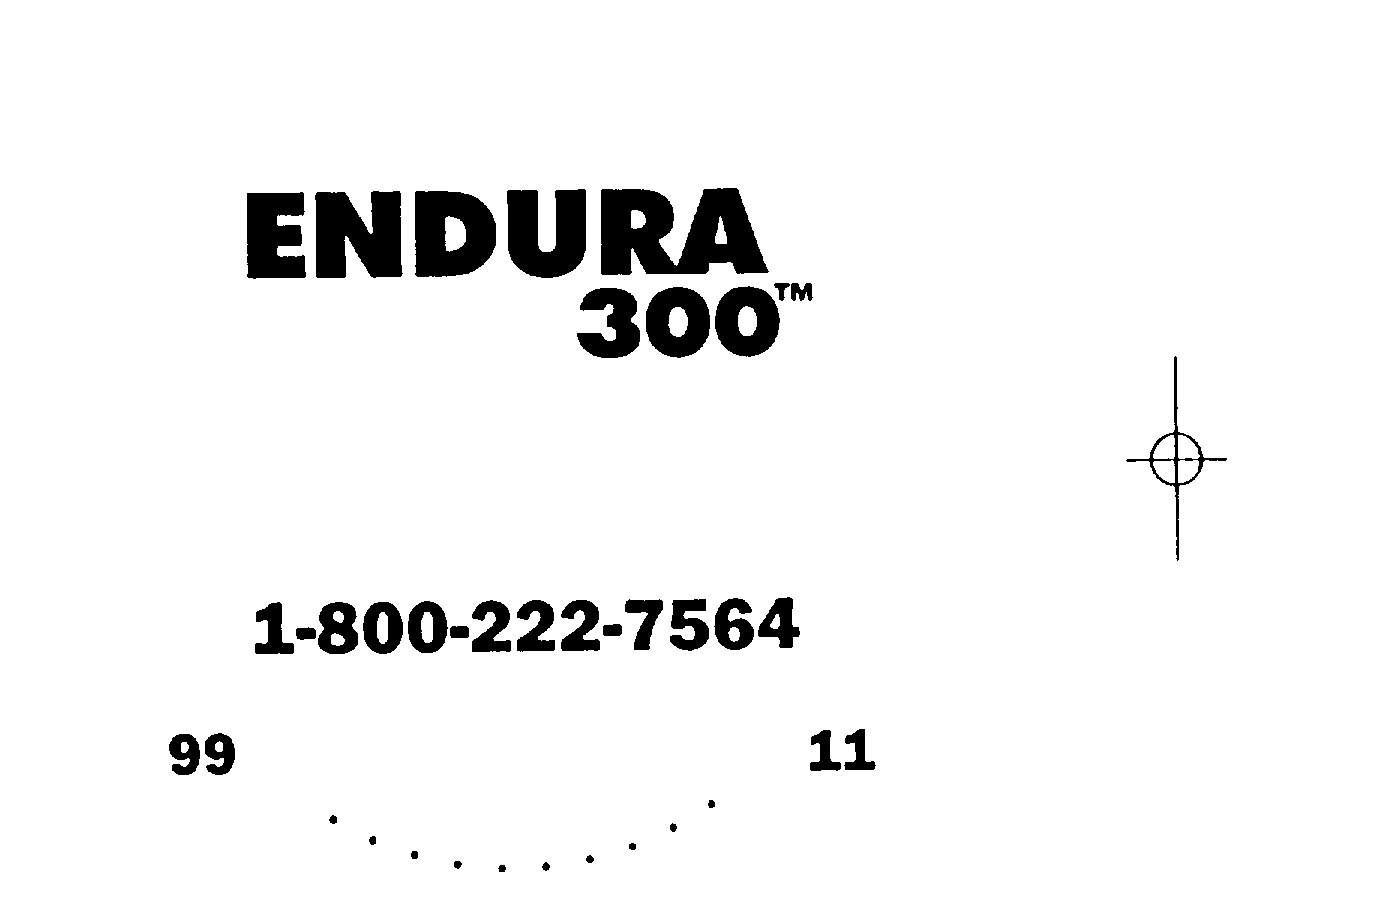  ENDURA 300